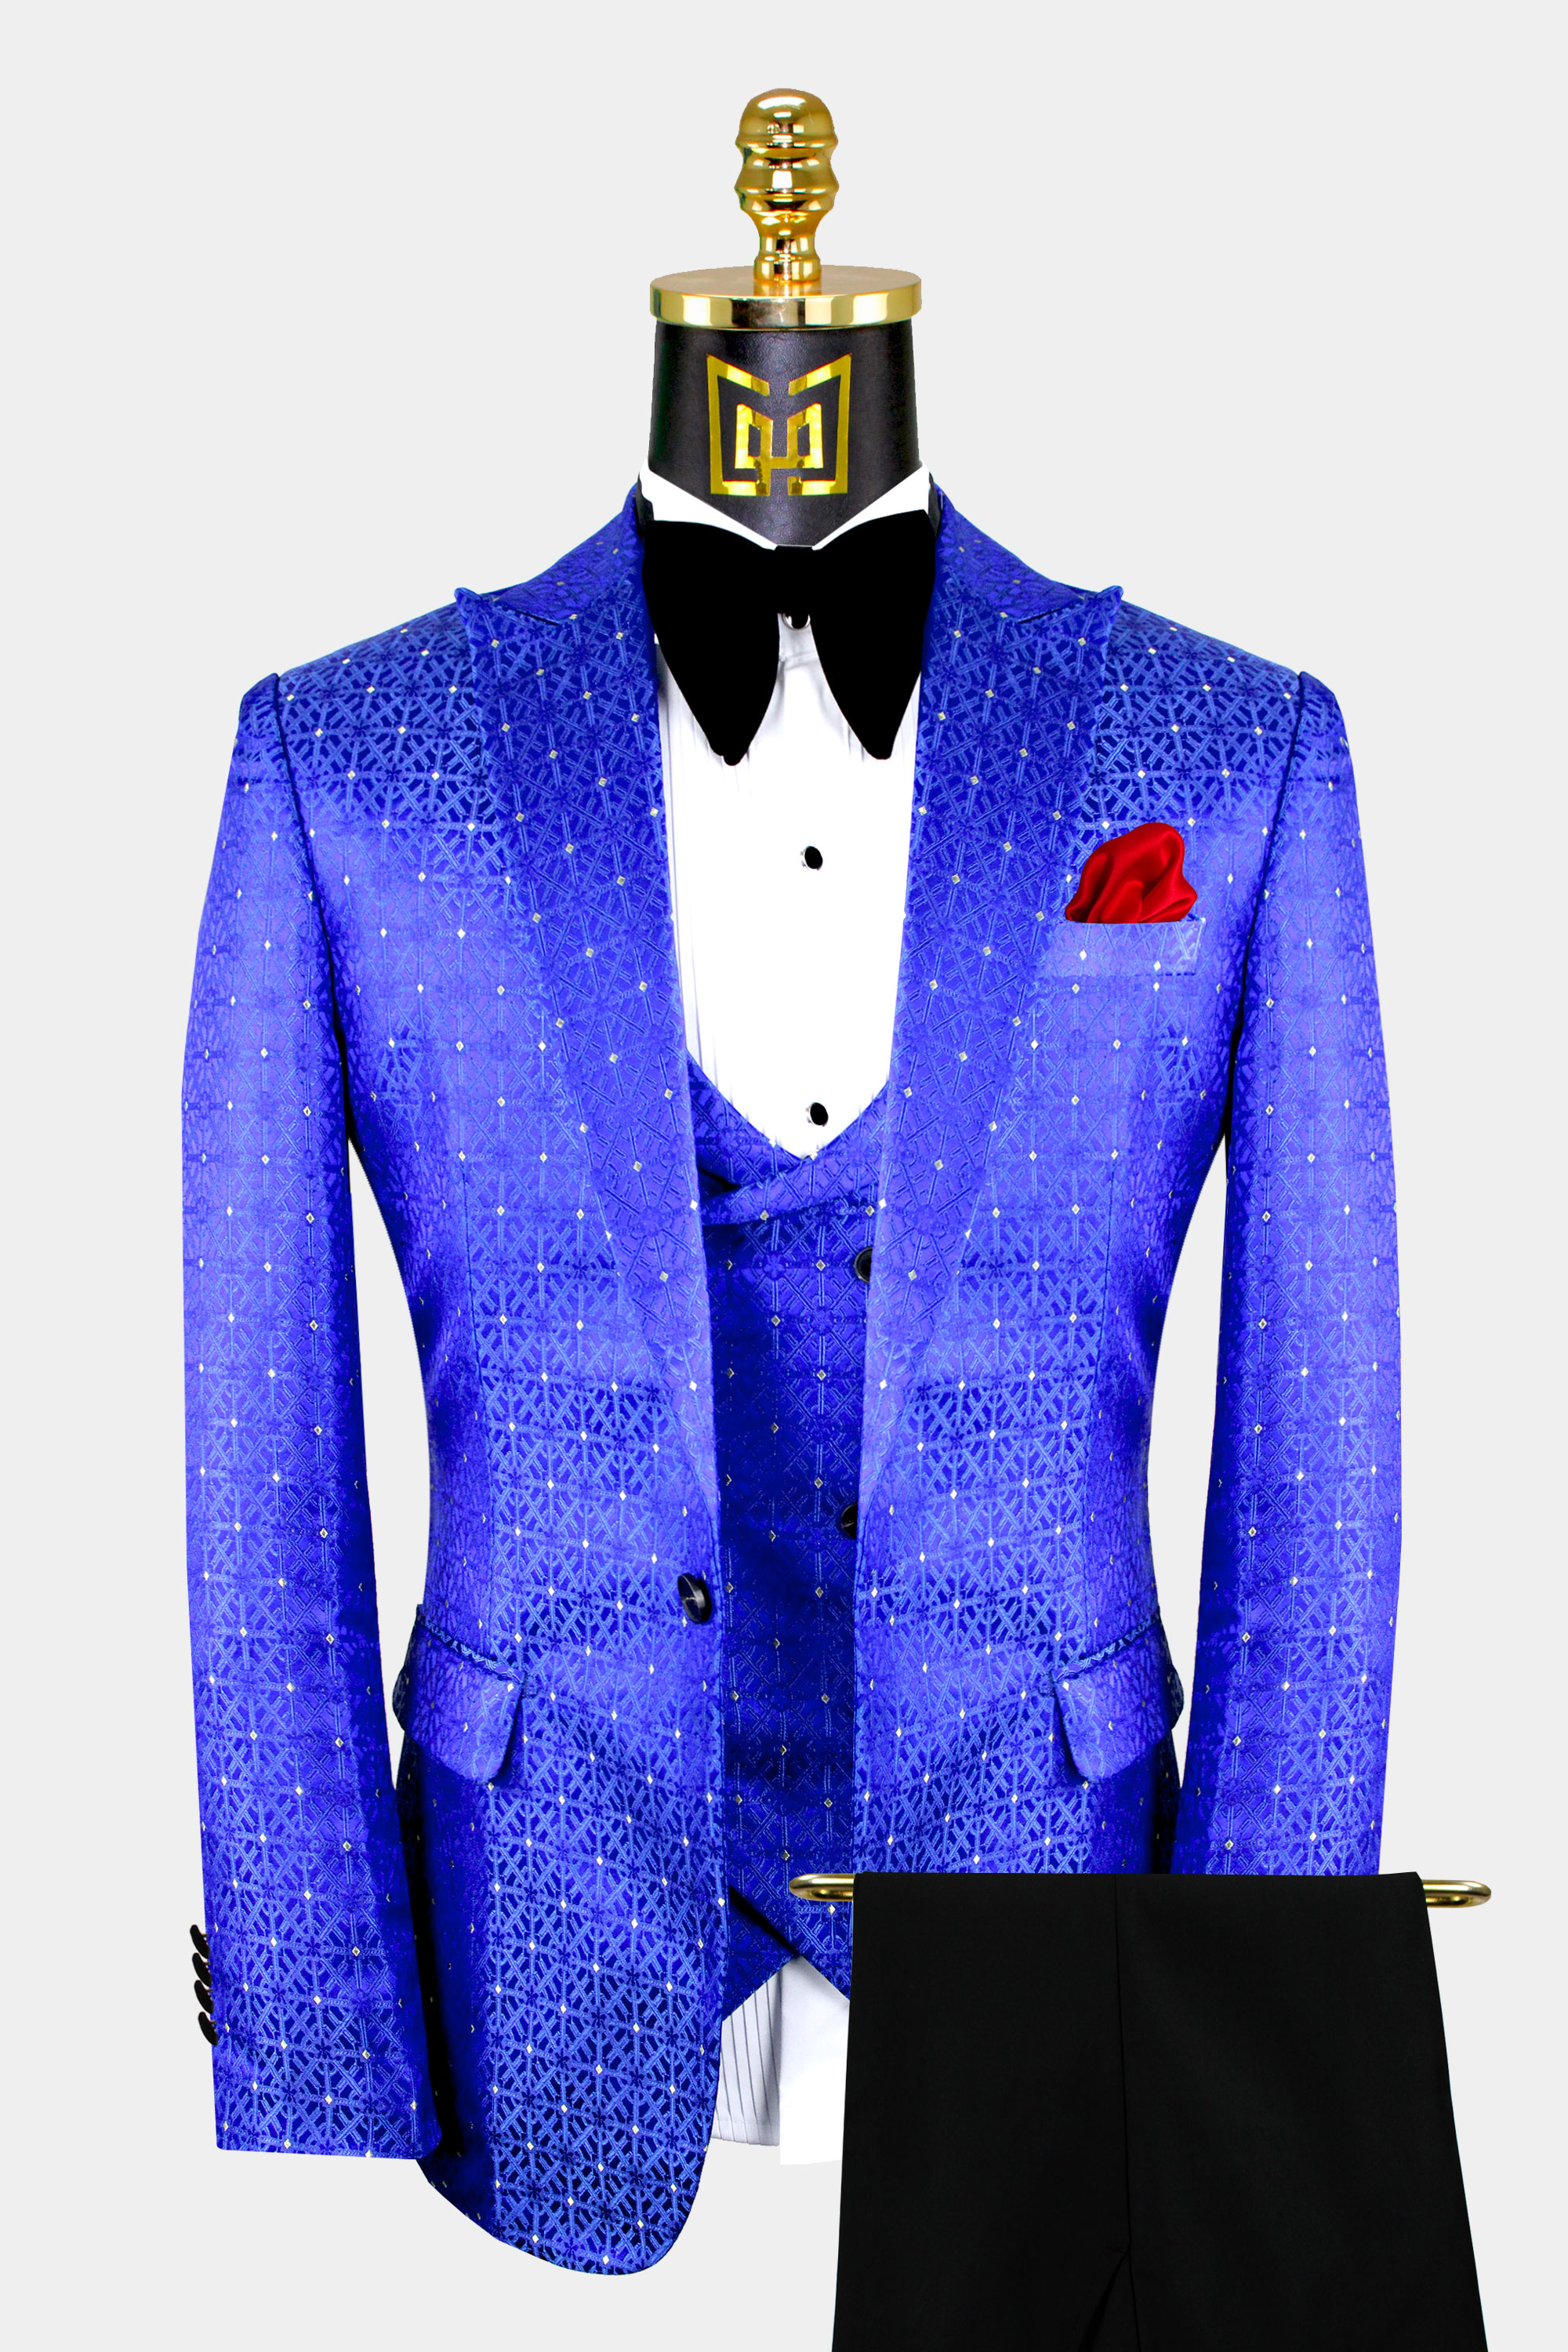 Mens-Bright-Blue-Diamond-Suit-Jacket-Prom-Suit-Tuxedo-from-Gentlemansguru.com